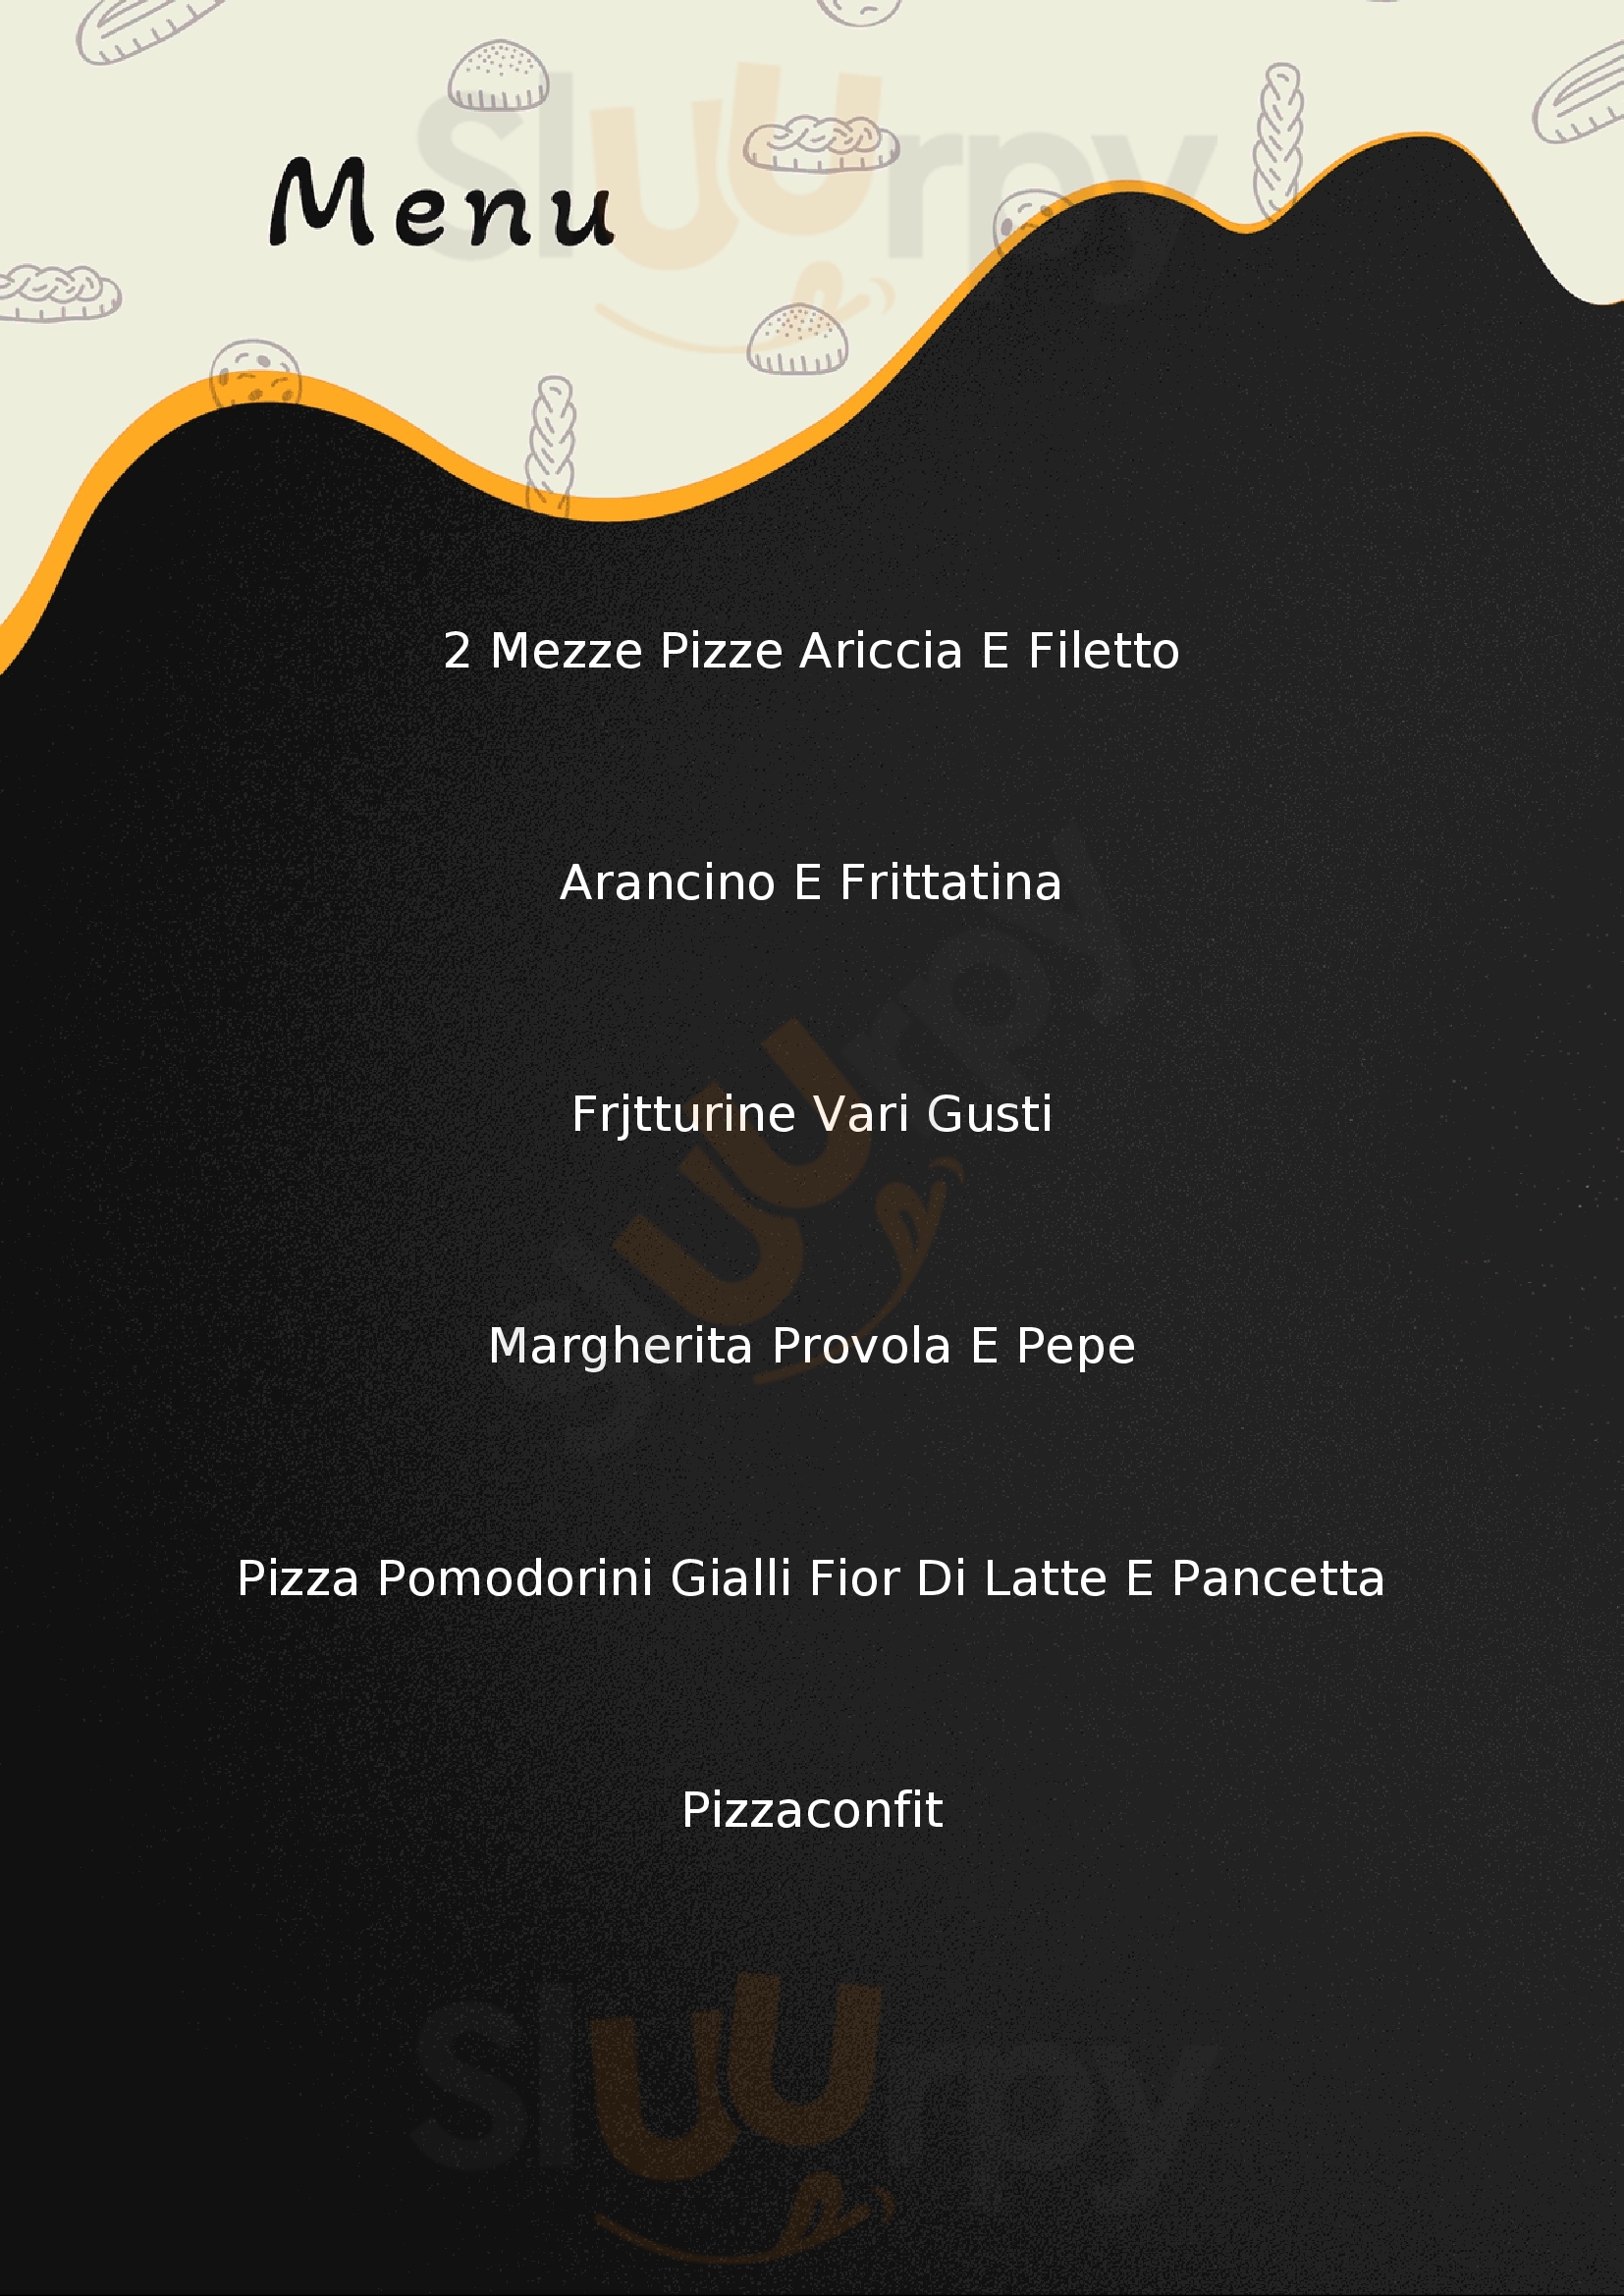 Le Radici Pizzeria San Giorgio a Cremano menù 1 pagina